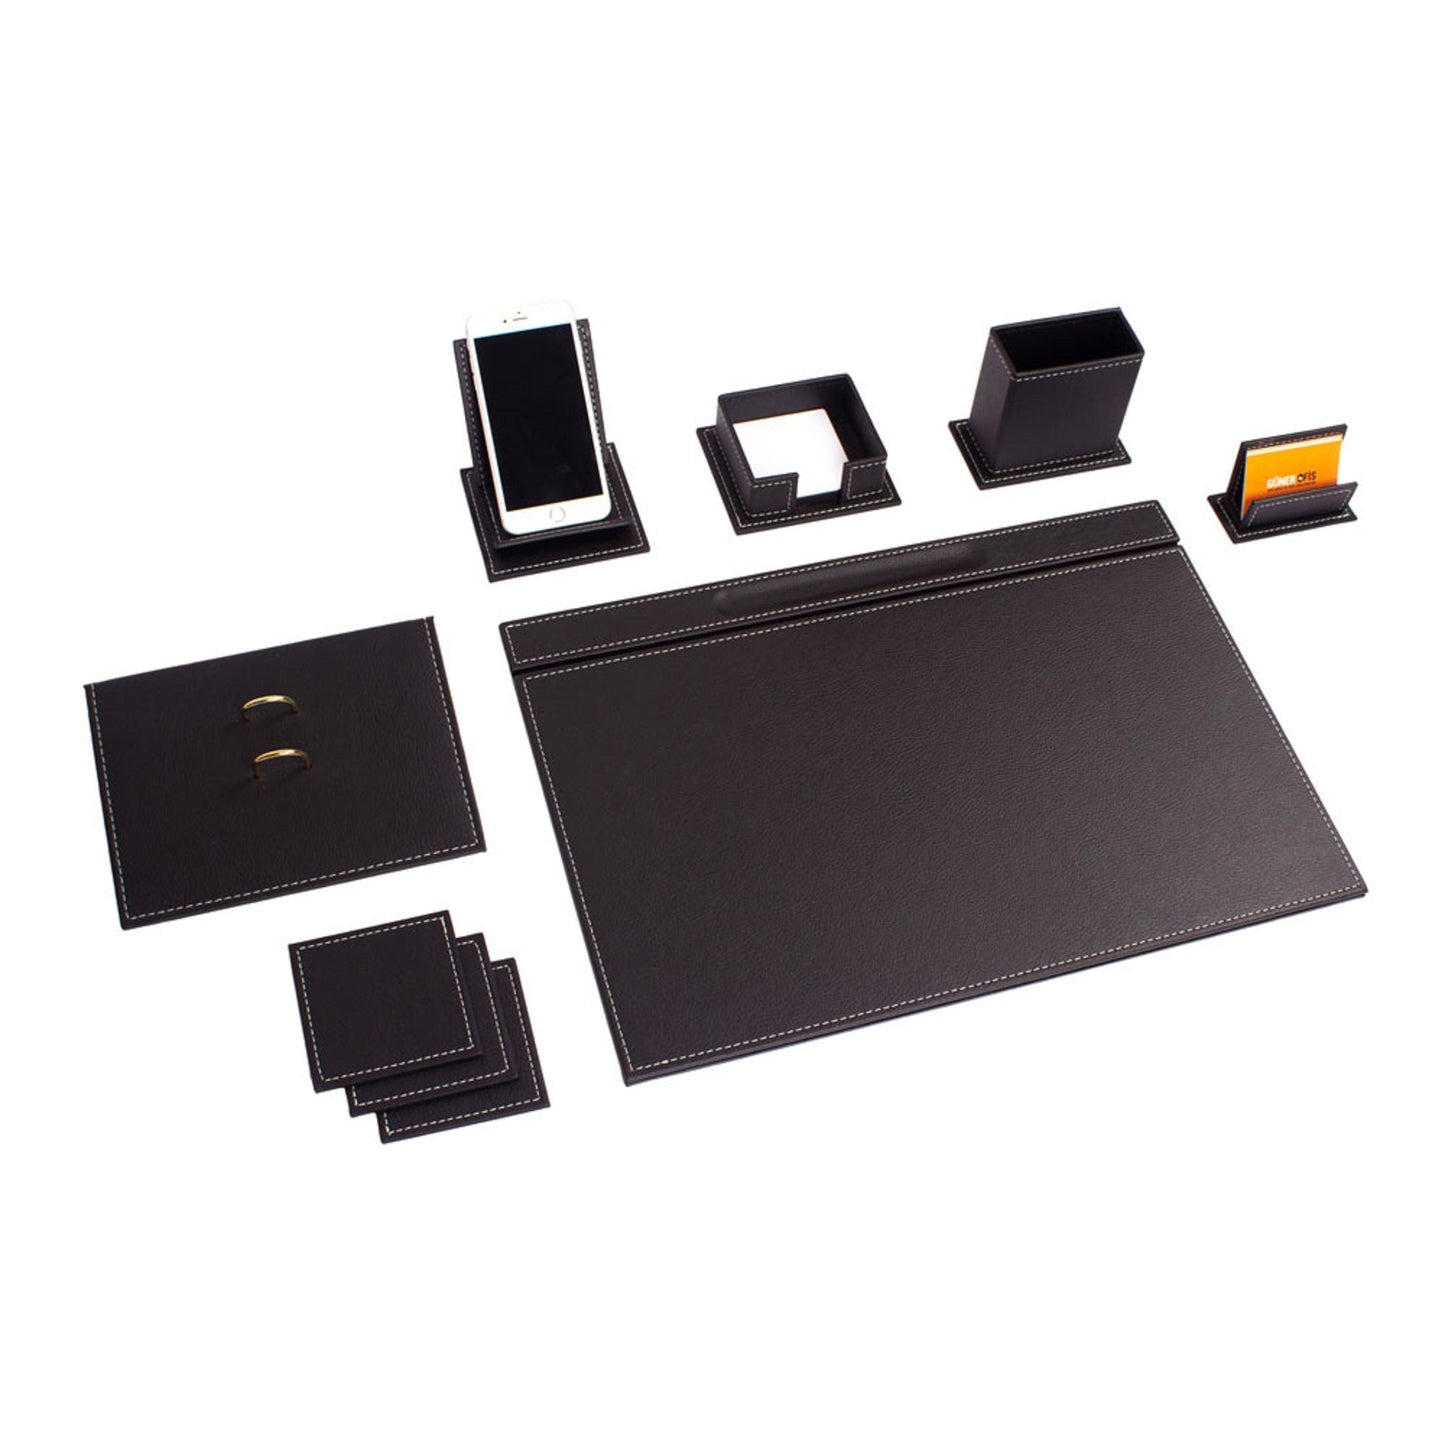 MOOG 9 Pieces Luxury Desk Set -Desk Office Accessories-Storage-Desk Organizers And Accessories-Office Desk Accessories-Desk Organizer Set-Desk Pads & Blotters - 9 PCS